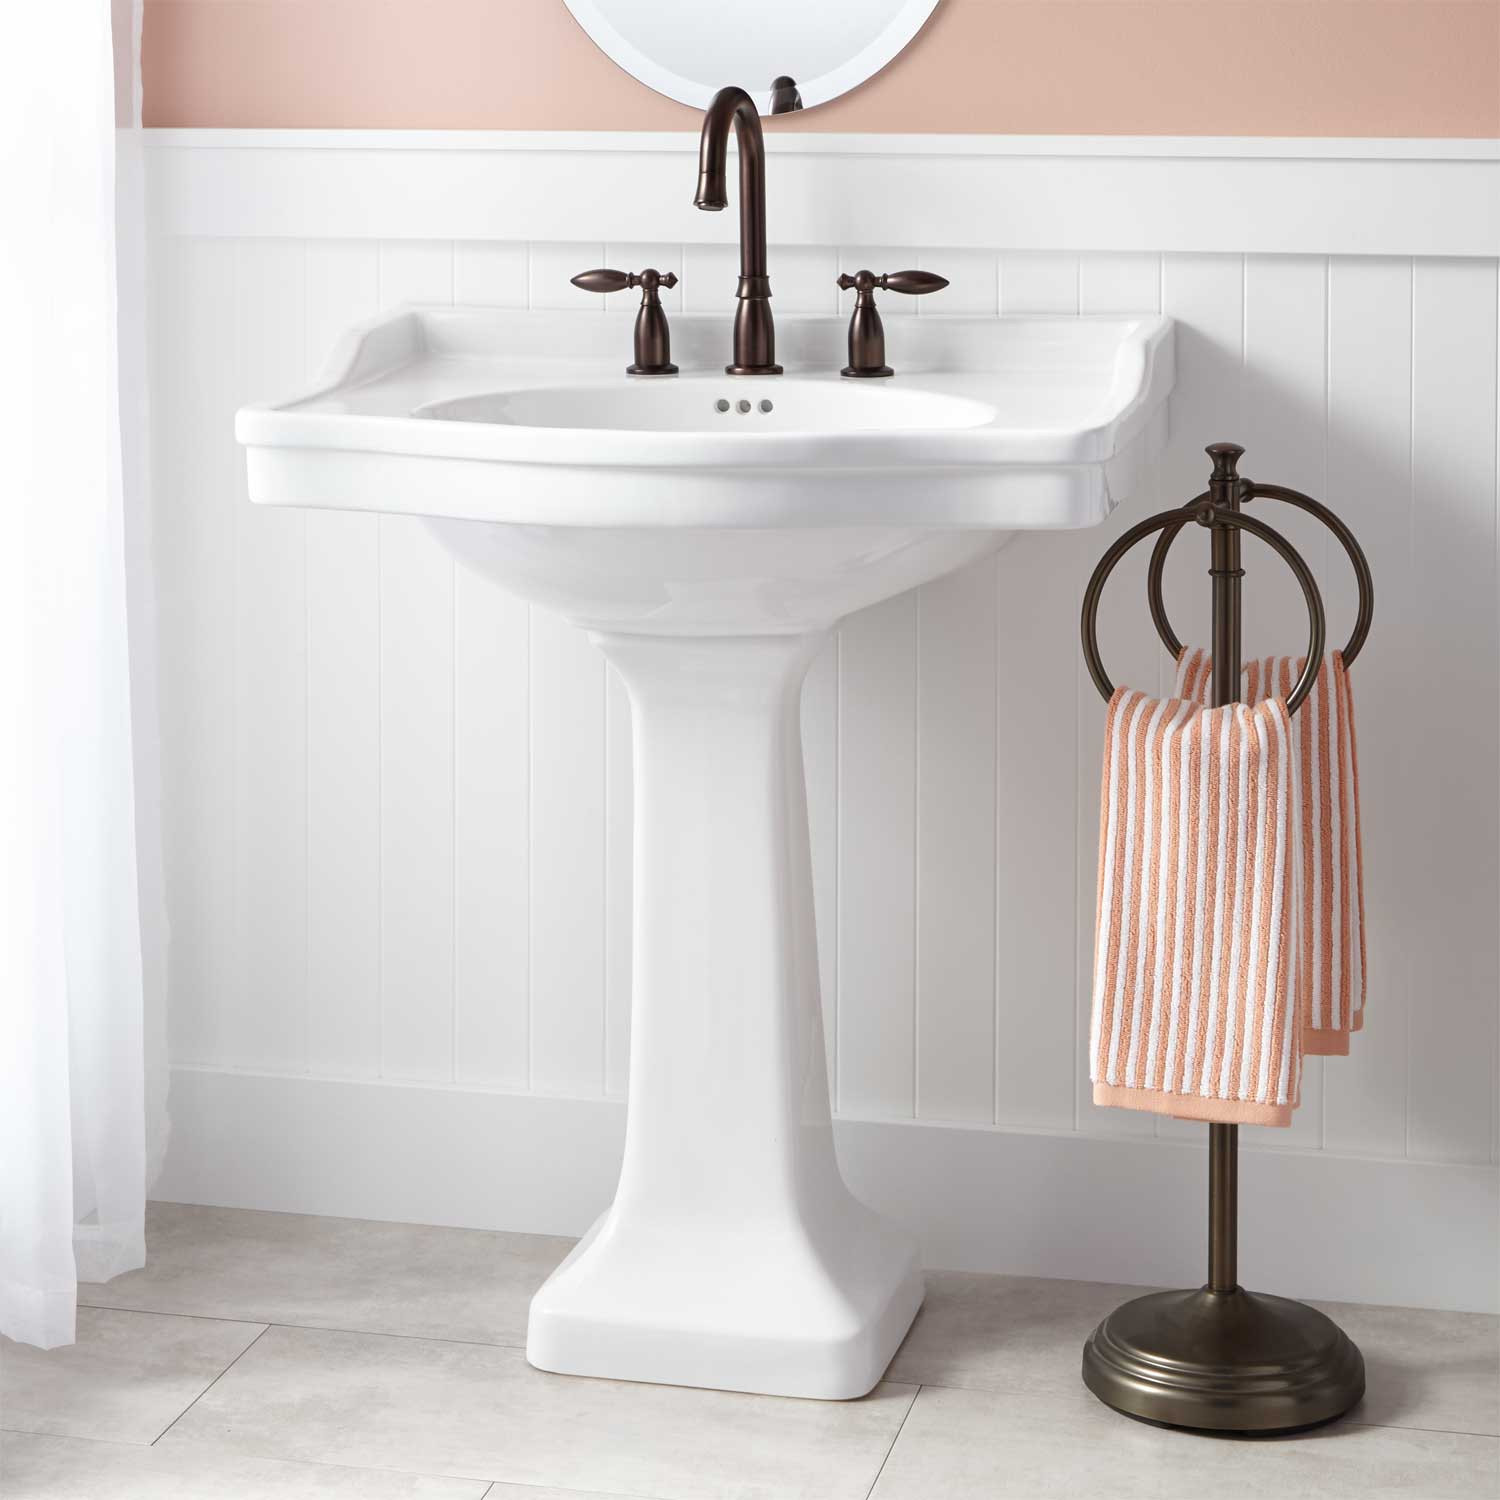 Best ideas about Pedestal Bathroom Sinks
. Save or Pin Cierra Porcelain Pedestal Sink Pedestal Sinks Now.